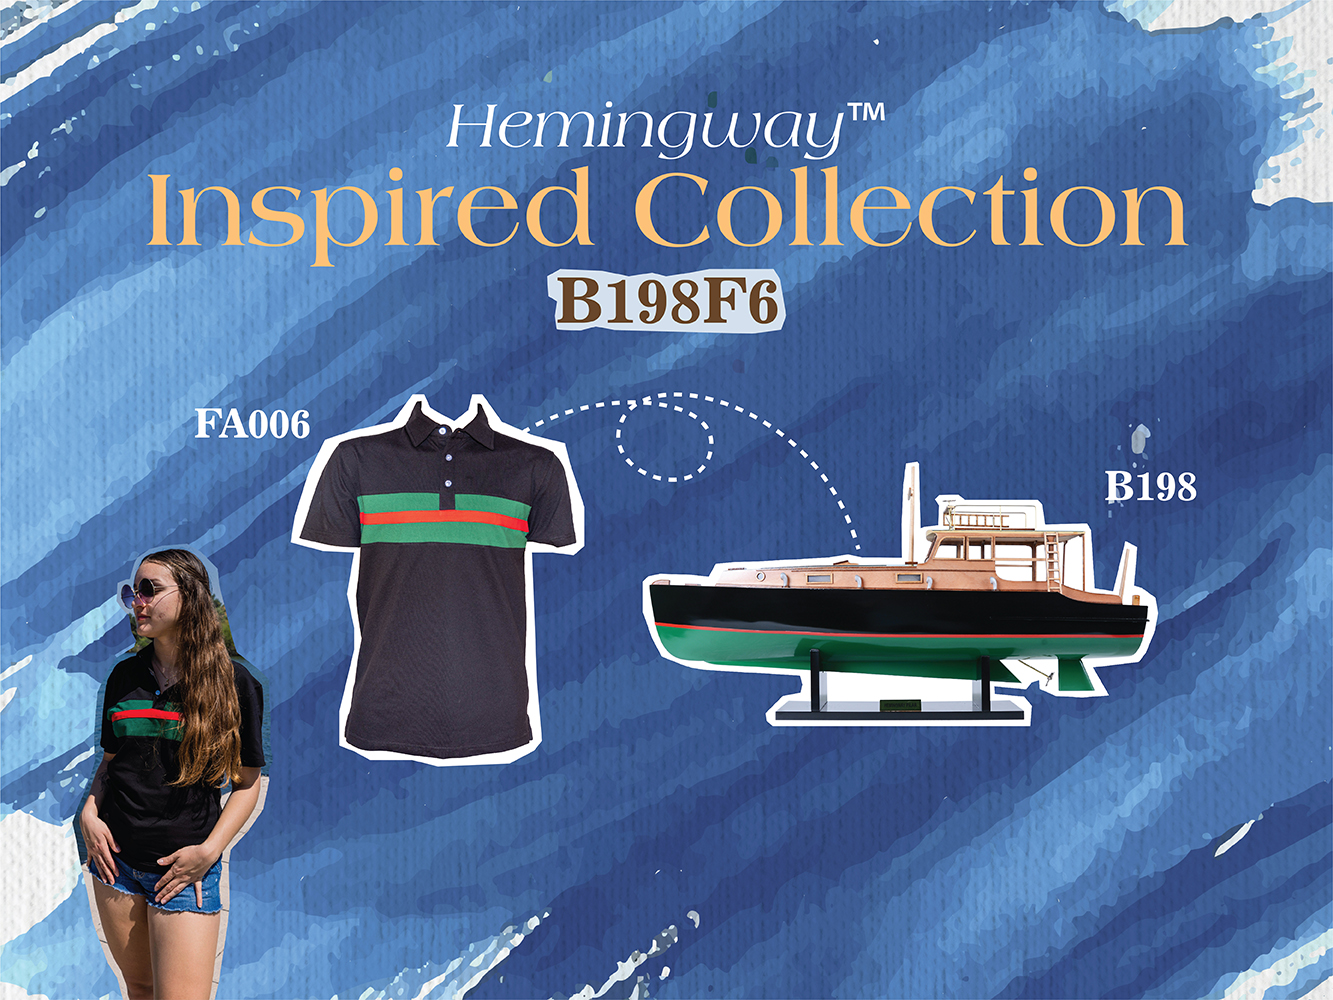 B198F6 Hemingway Pilar Fishing Boat Combo: A Model and Polo Shirt Set b198f6-hemingway-pilar-fishing-boat-combo-a-model-and-polo-shirt-set-l01.jpg